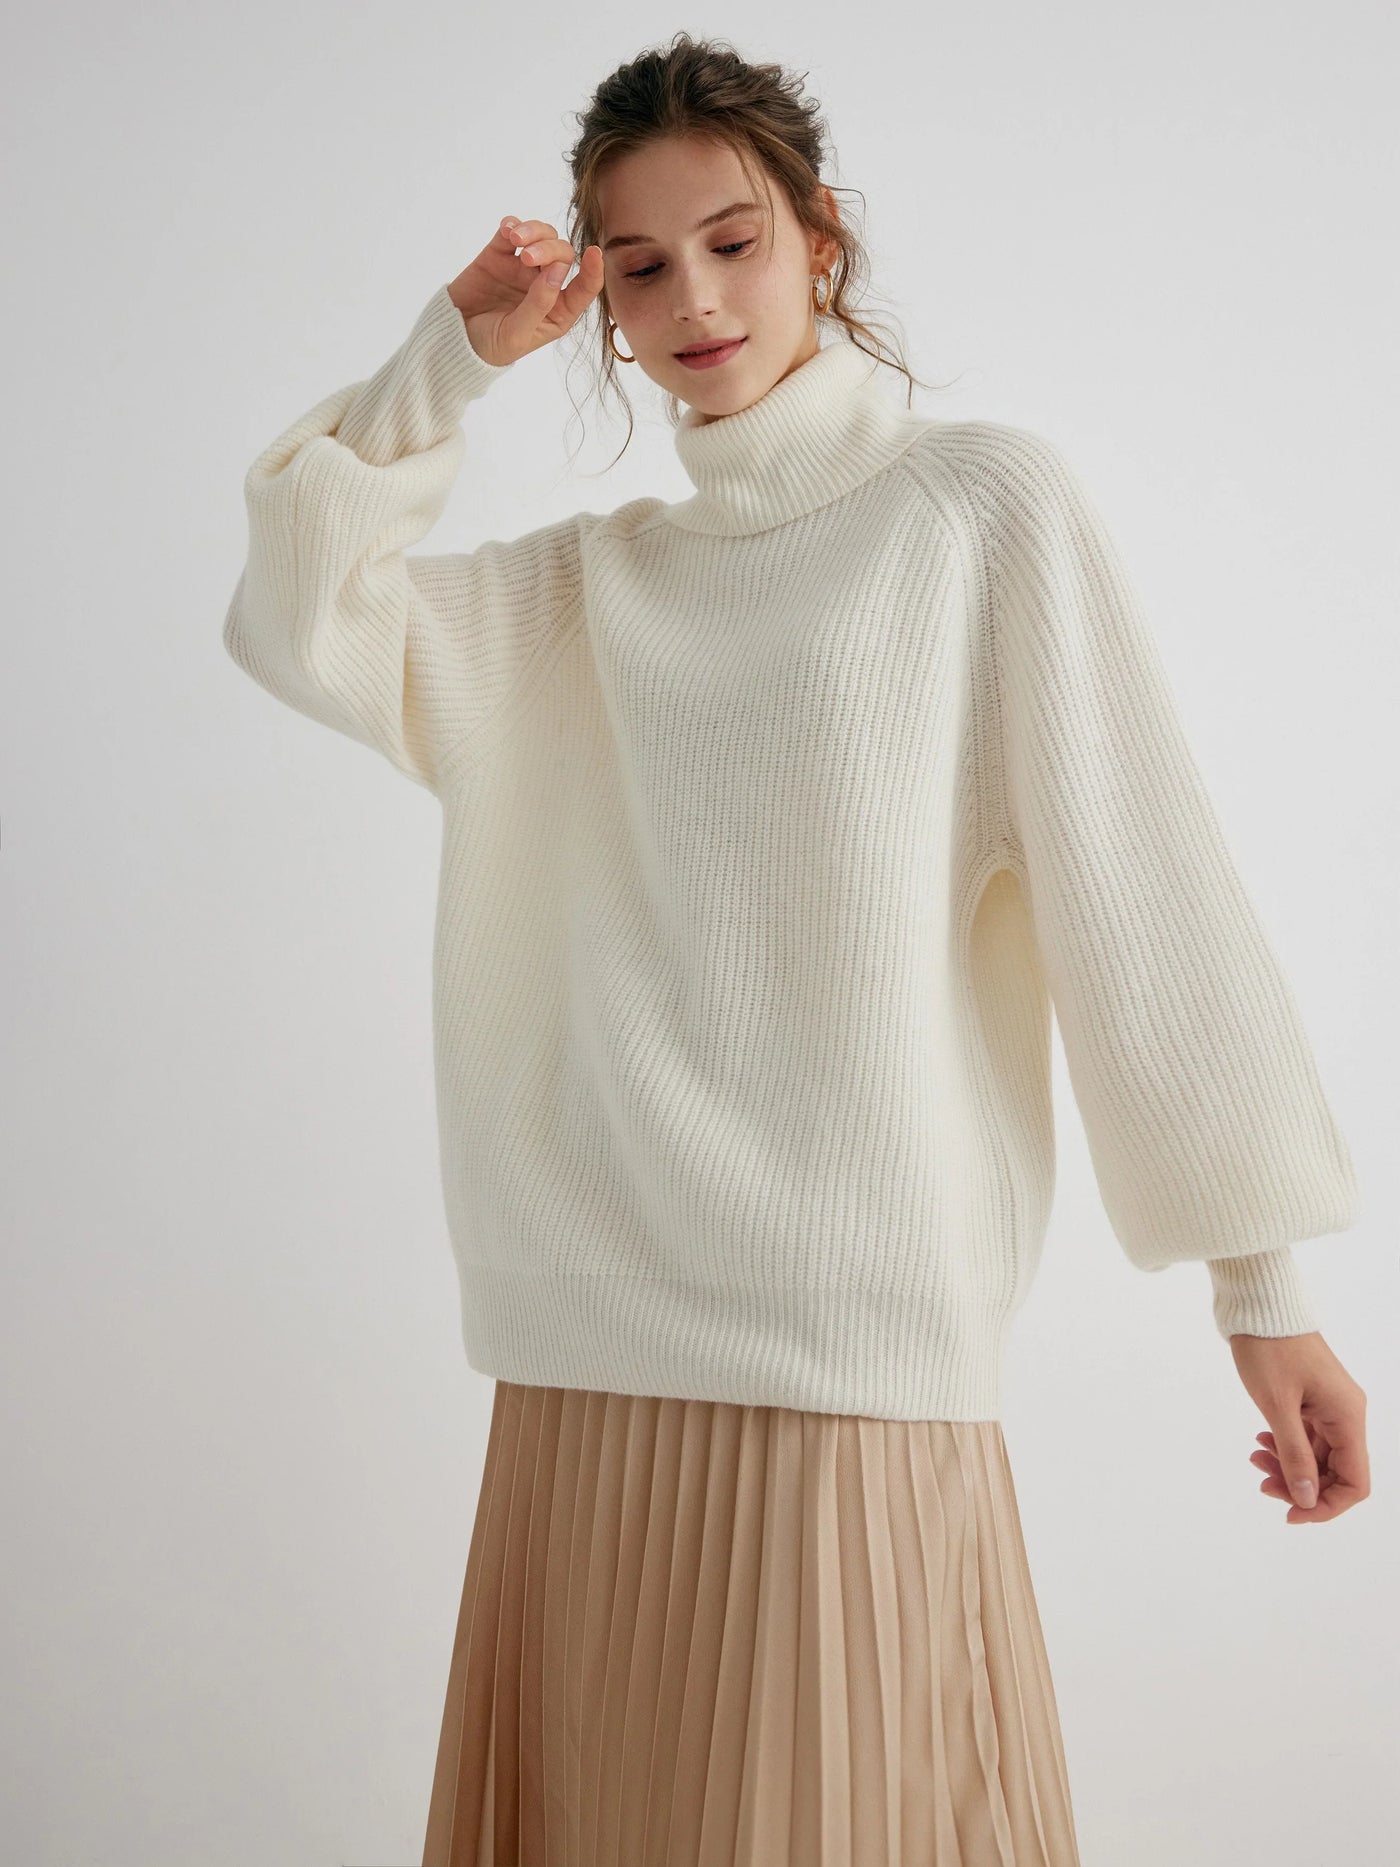 Lana 100% Merino Wool White Oversized Turtleneck Pullover